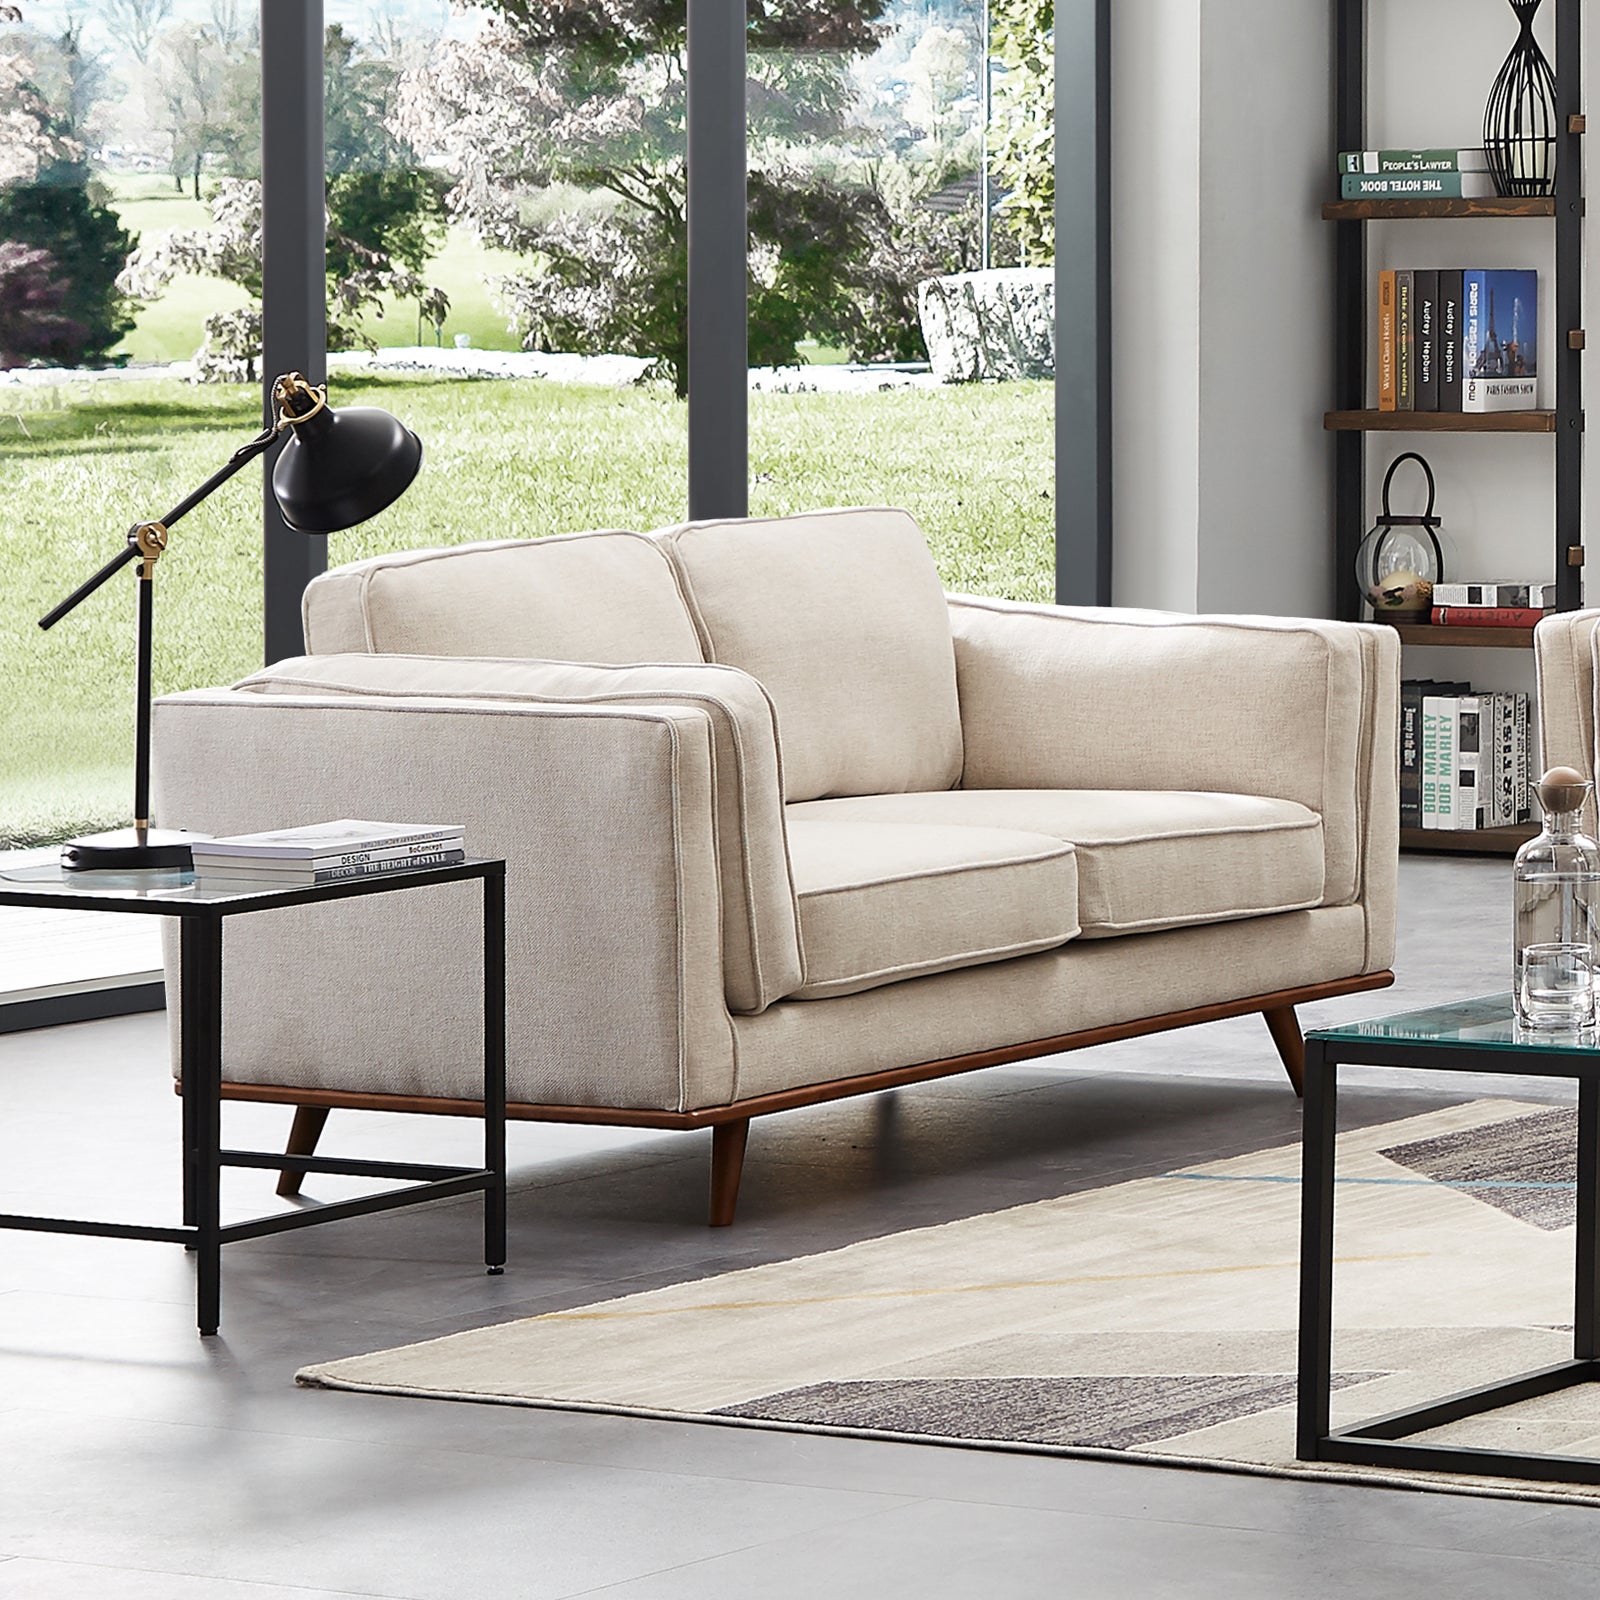 York 2 Seater Fabric Armchair Sofa Modern Lounge in Beige Colour